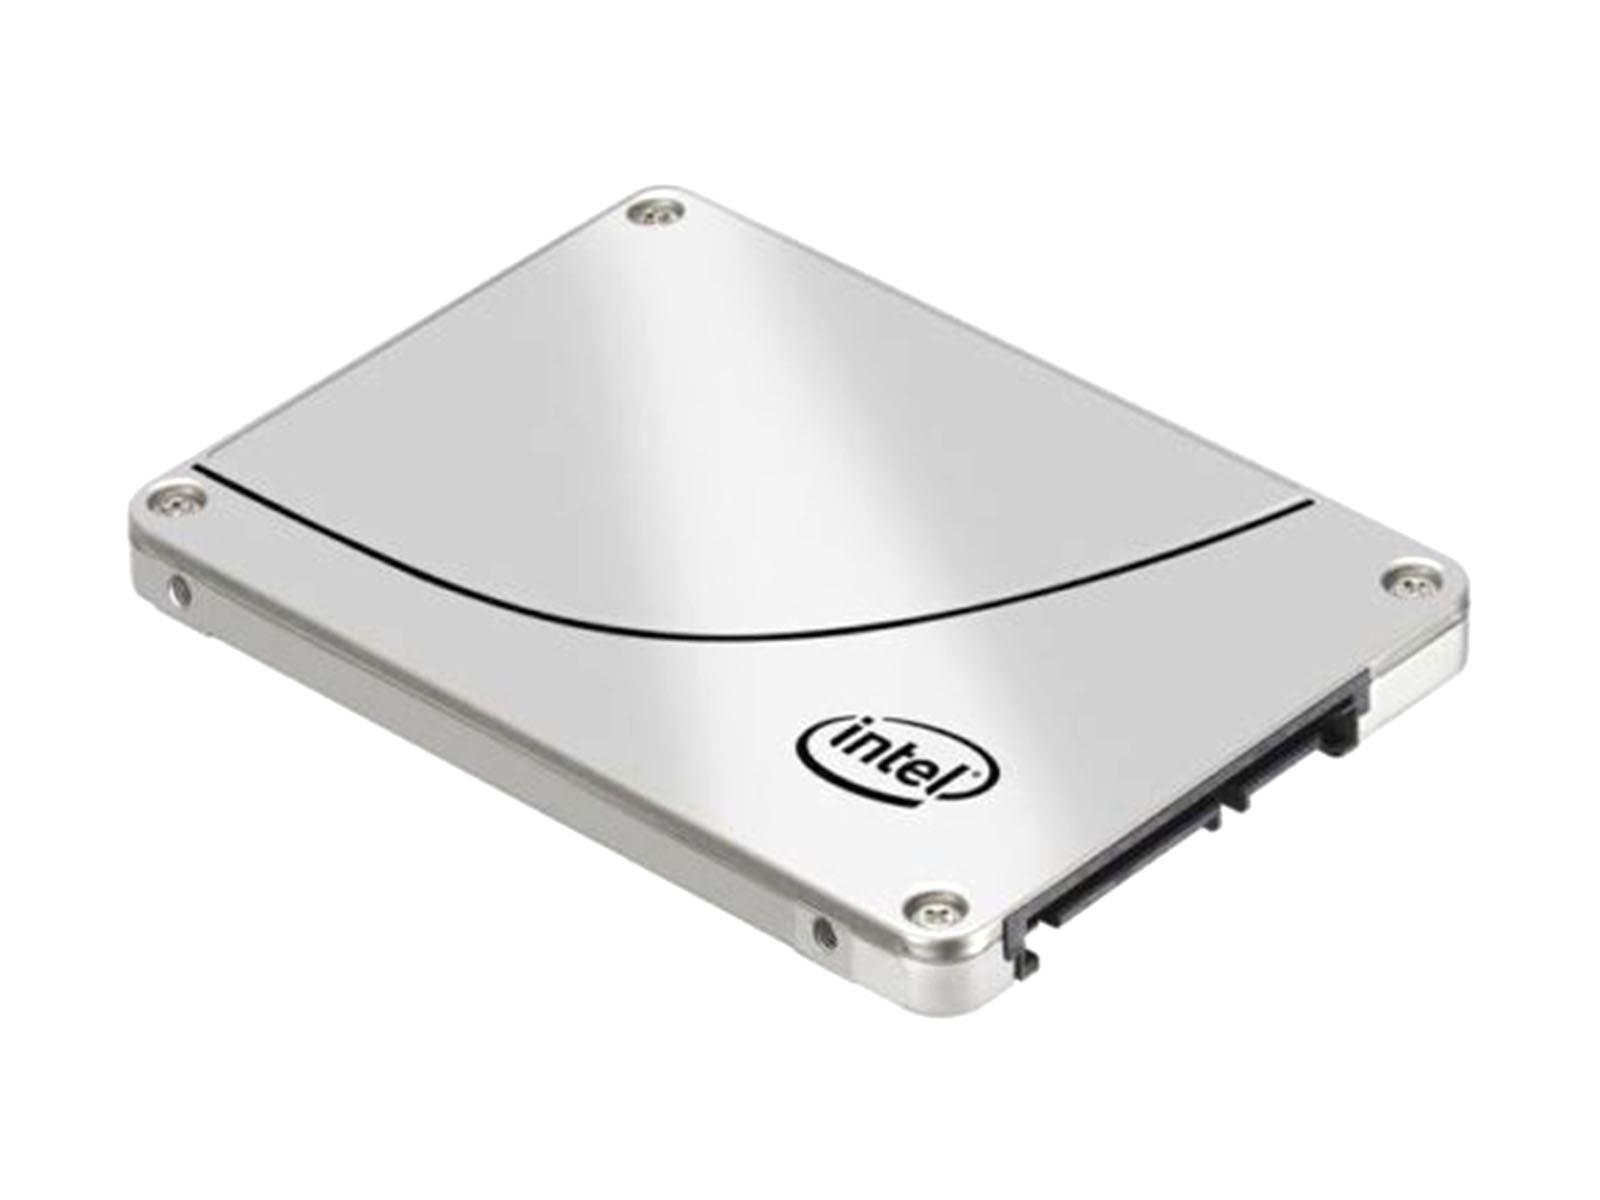 Intel DC S3500 160GB SSD